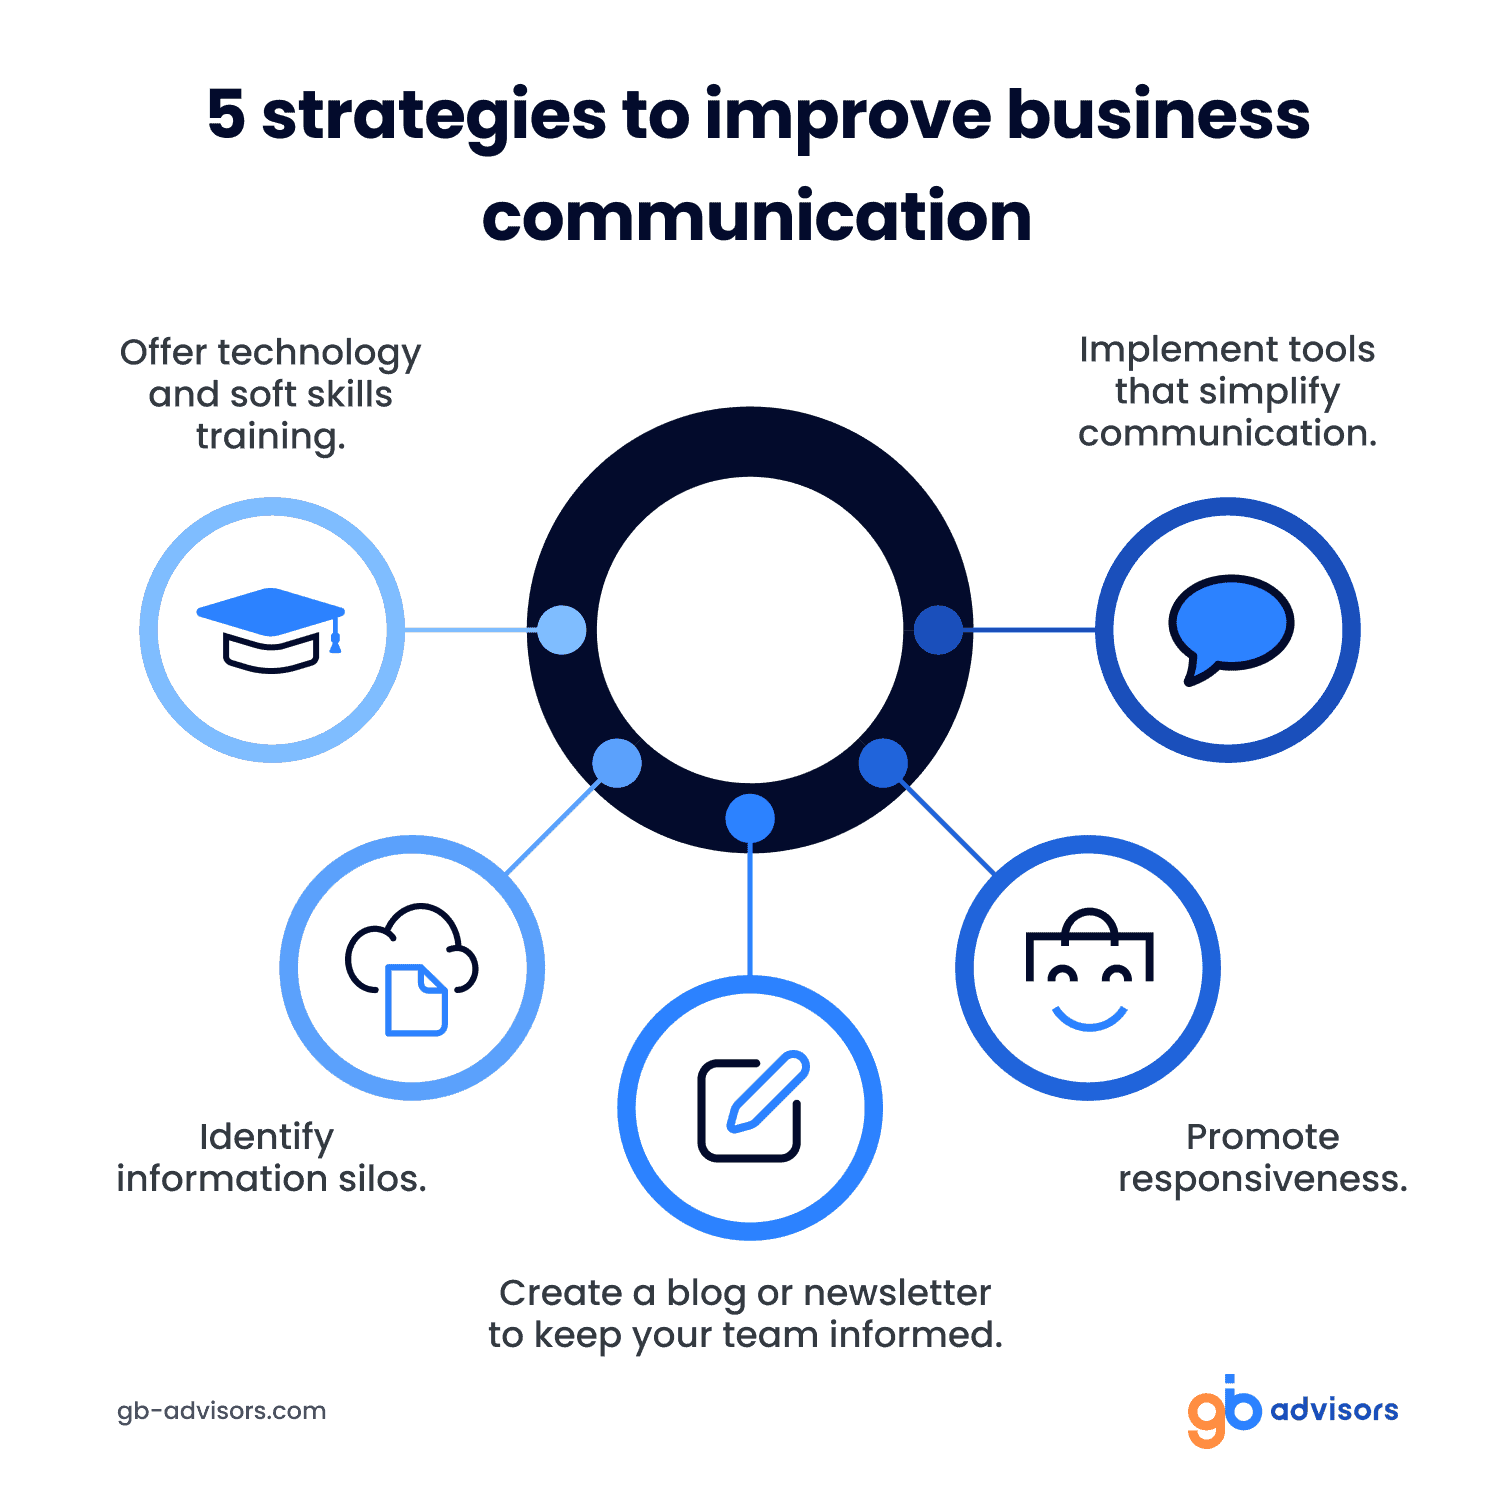 Strategies to improve communication